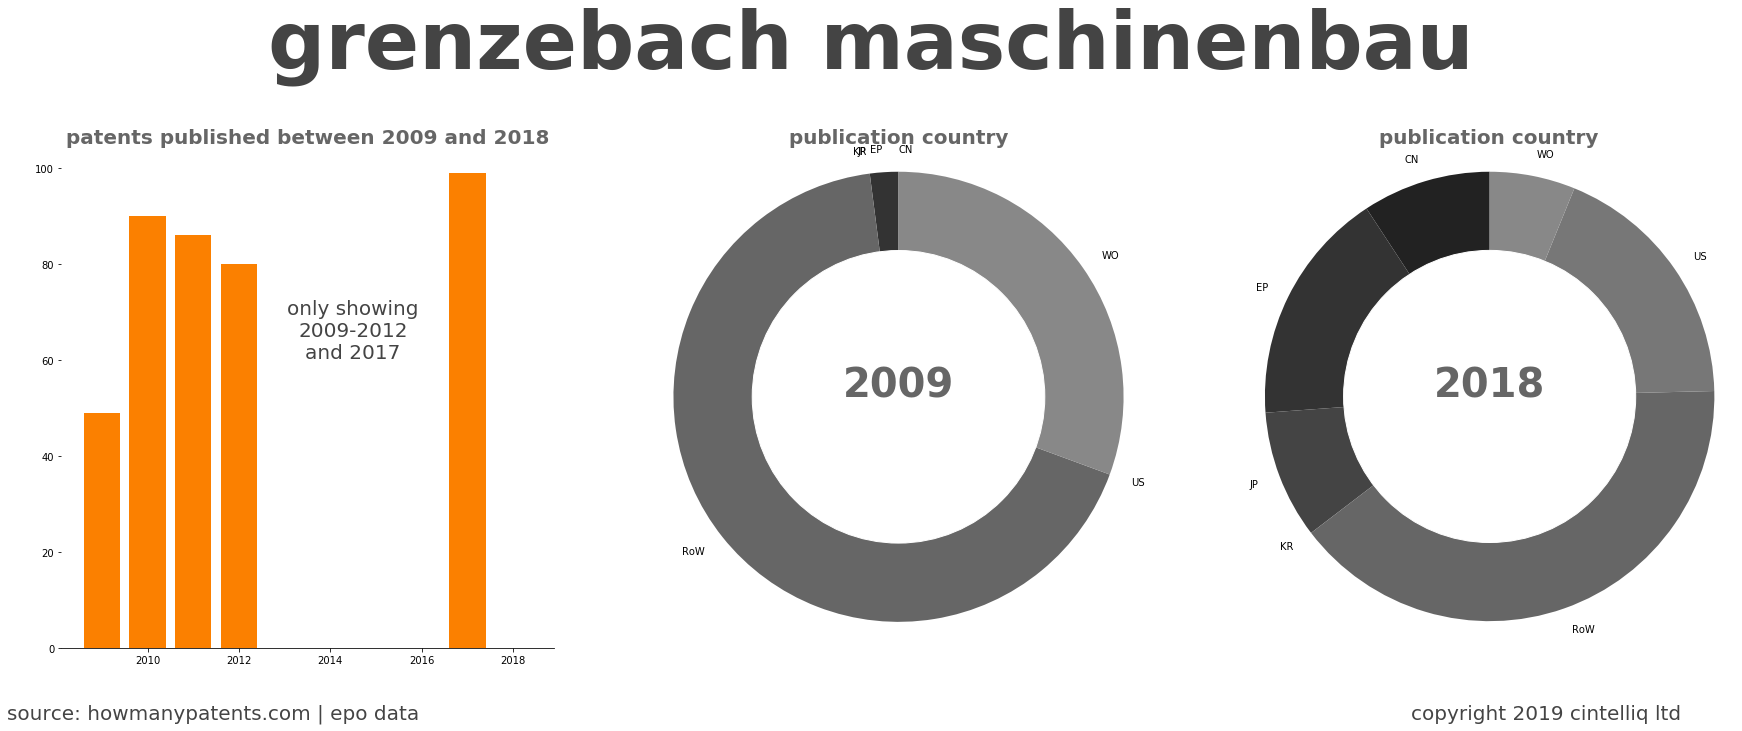 summary of patents for Grenzebach Maschinenbau